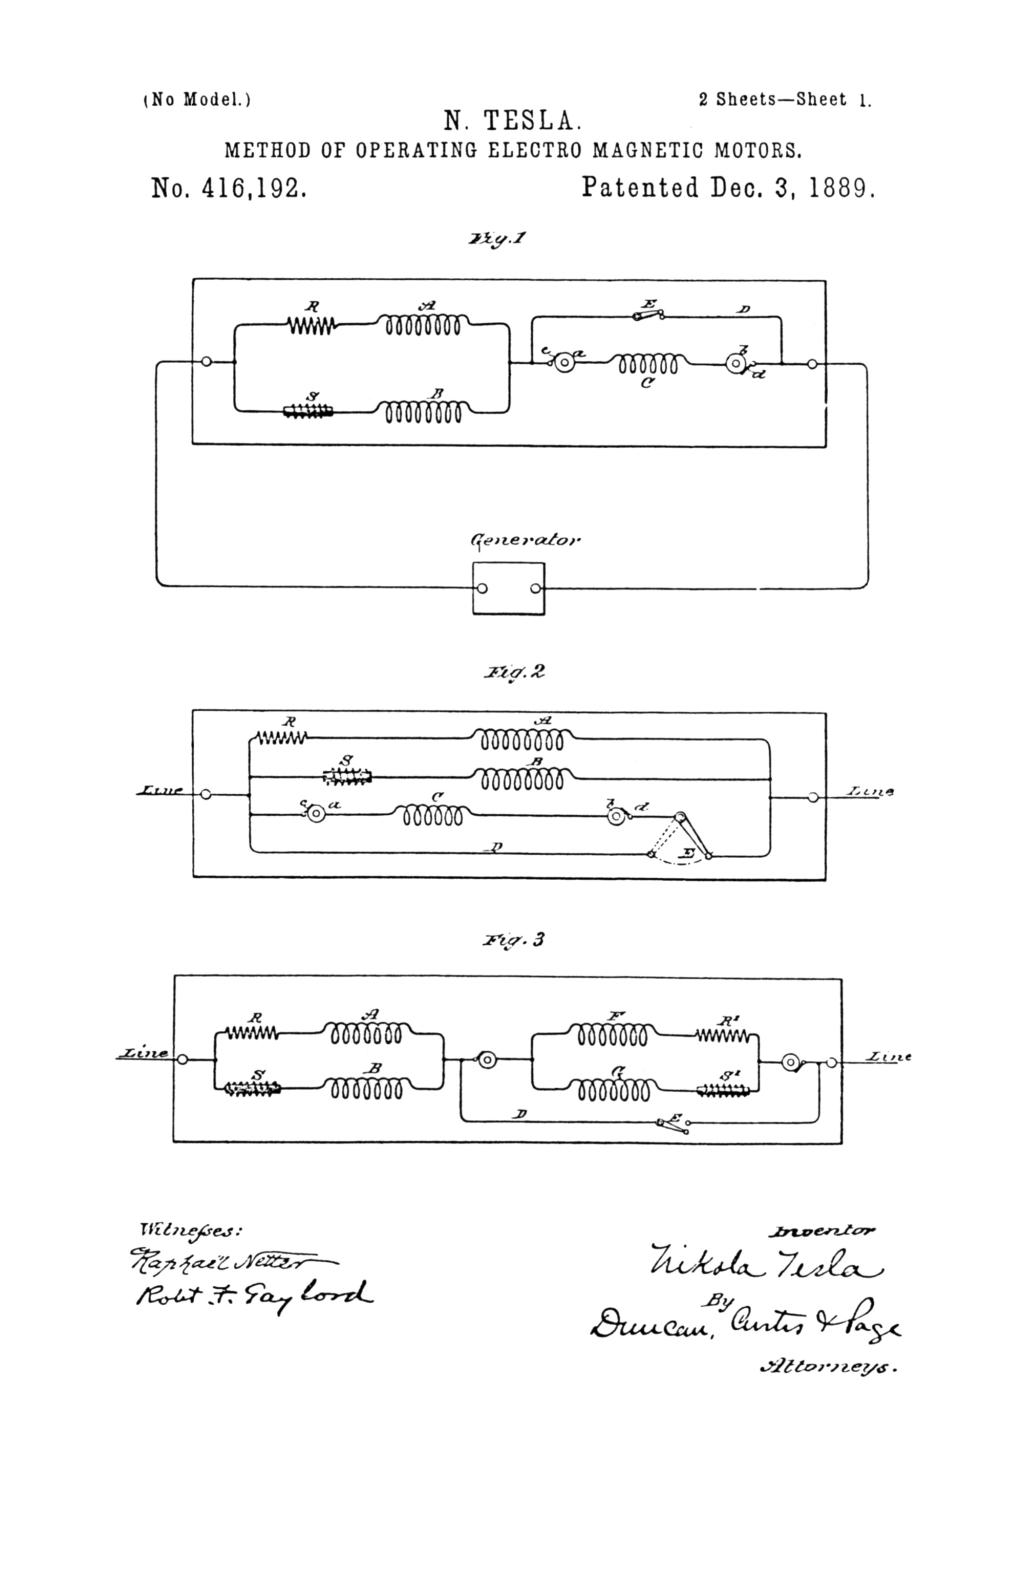 Nikola Tesla U.S. Patent 416,192 - Method of Operating Electro-Magnetic Motors - Image 1